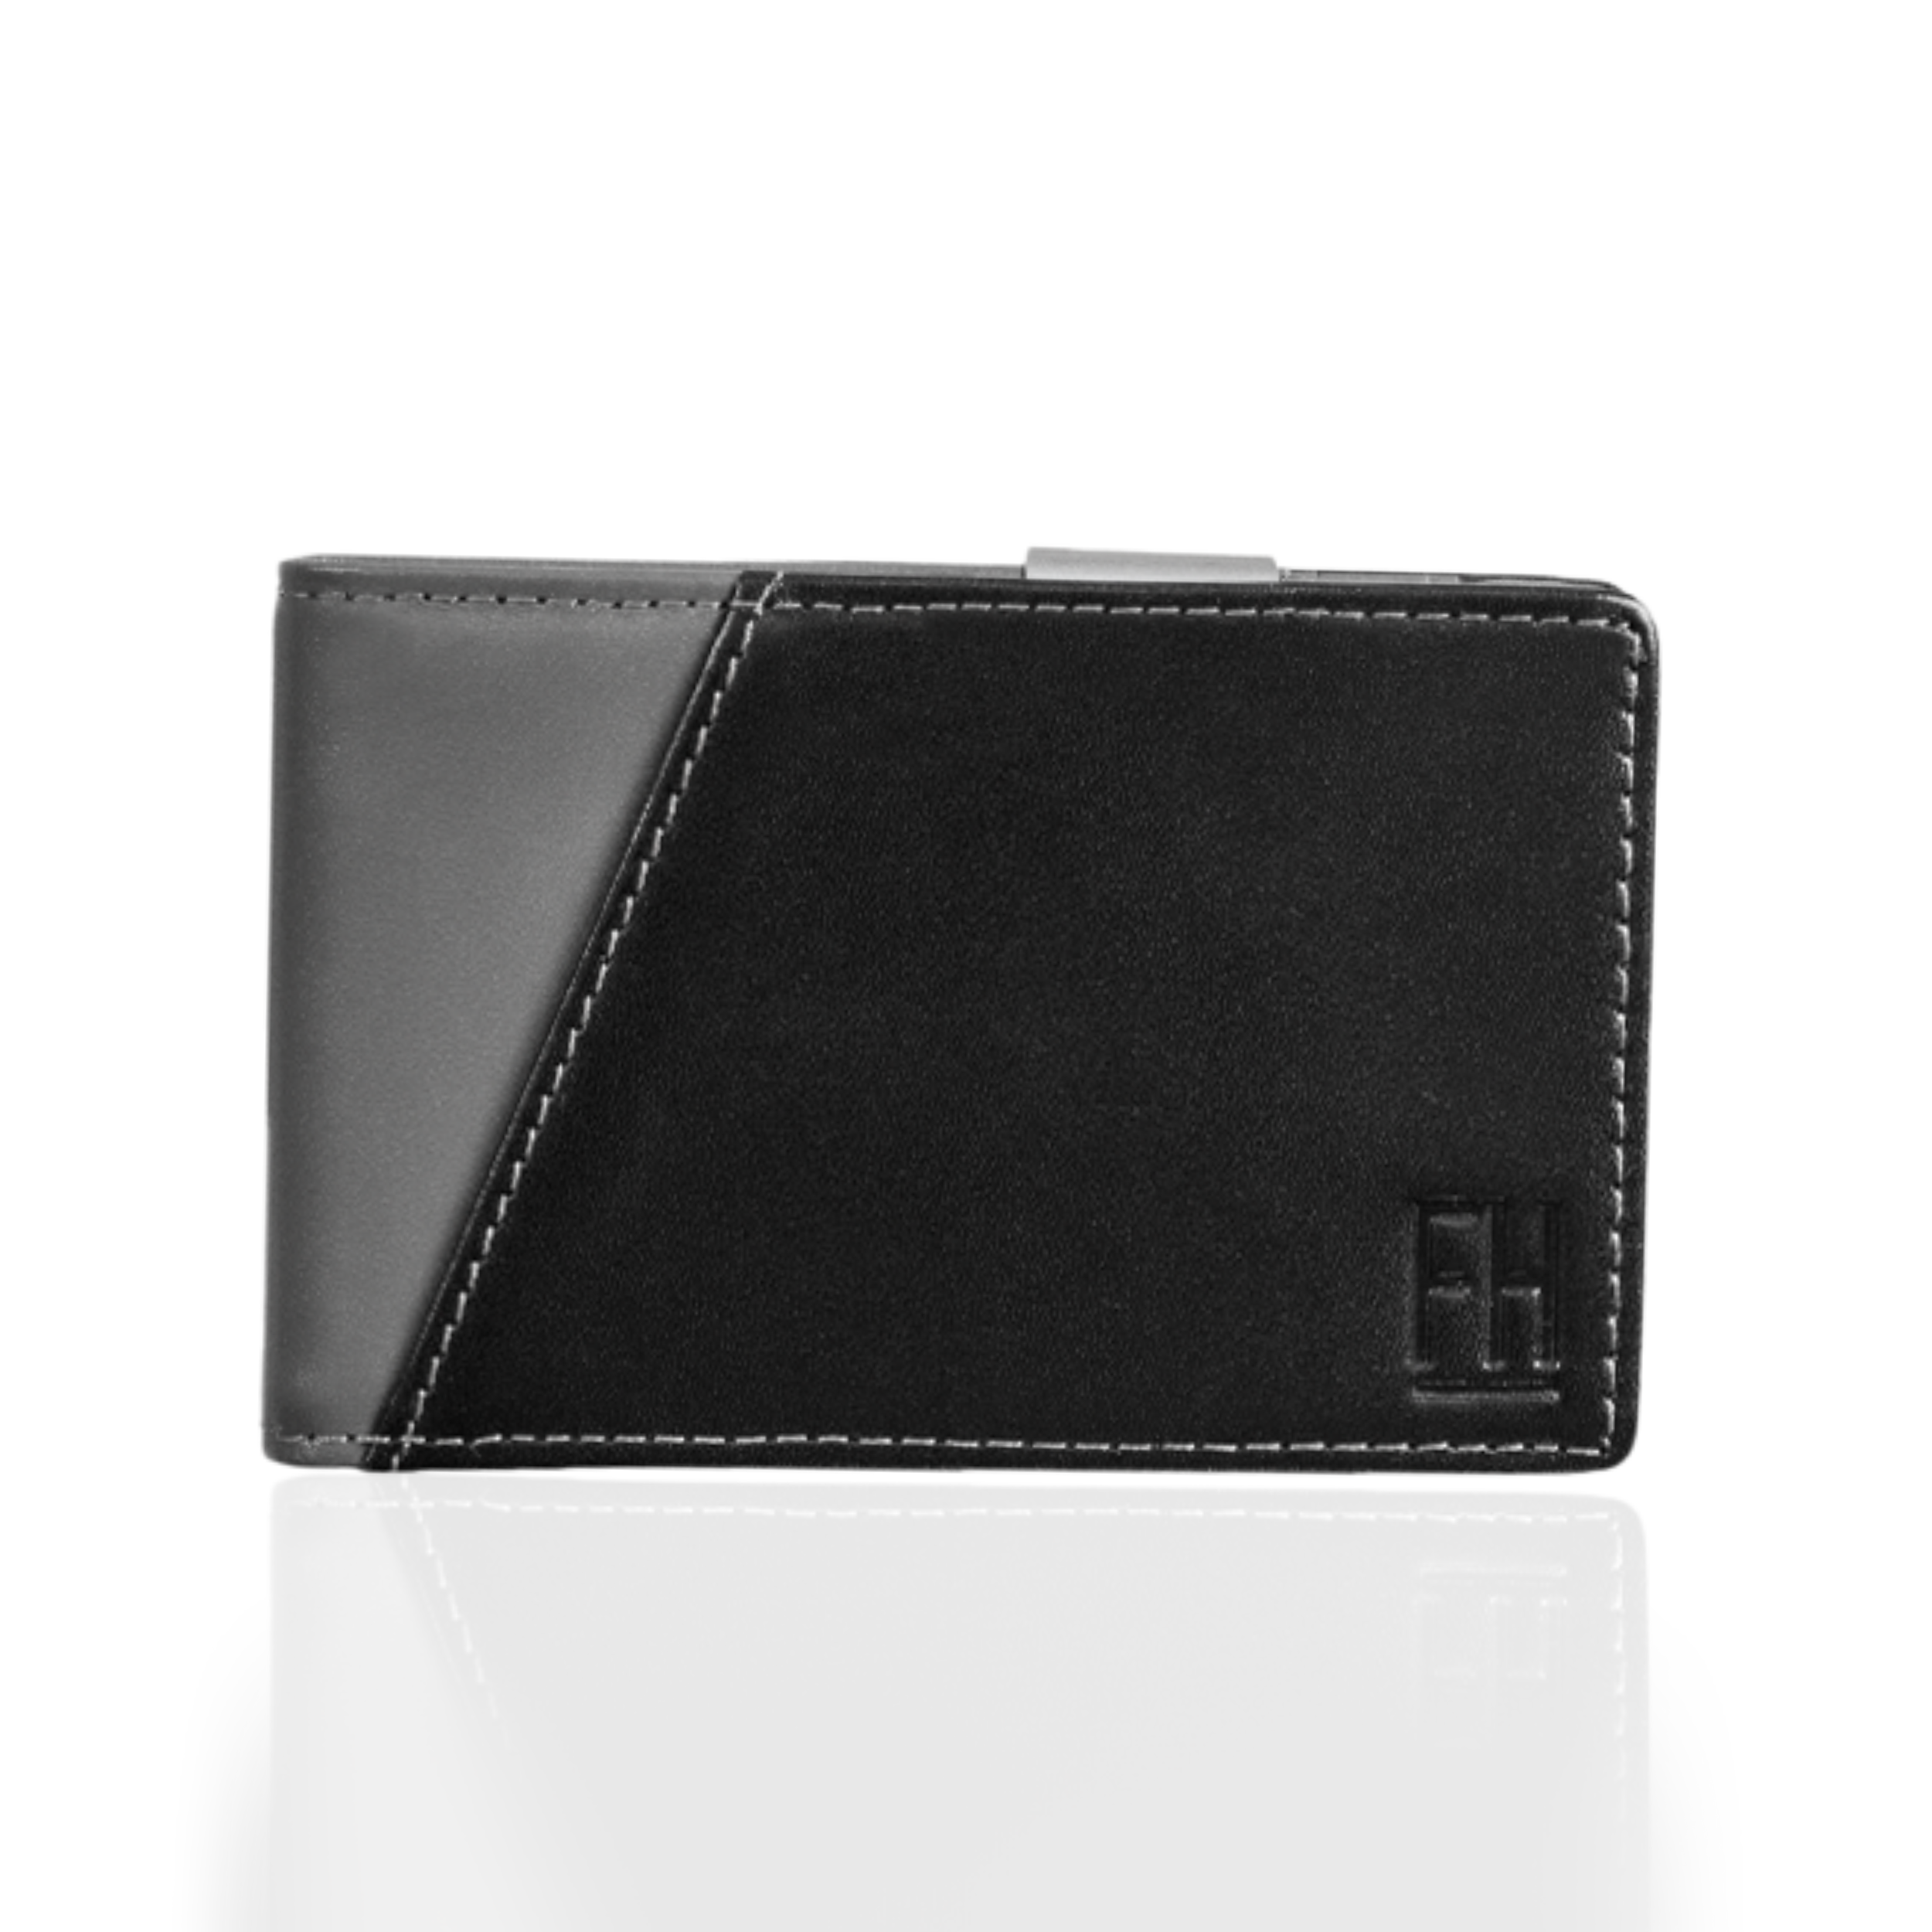 Slim RFID Money Clip Wallet in Top Grain Leather